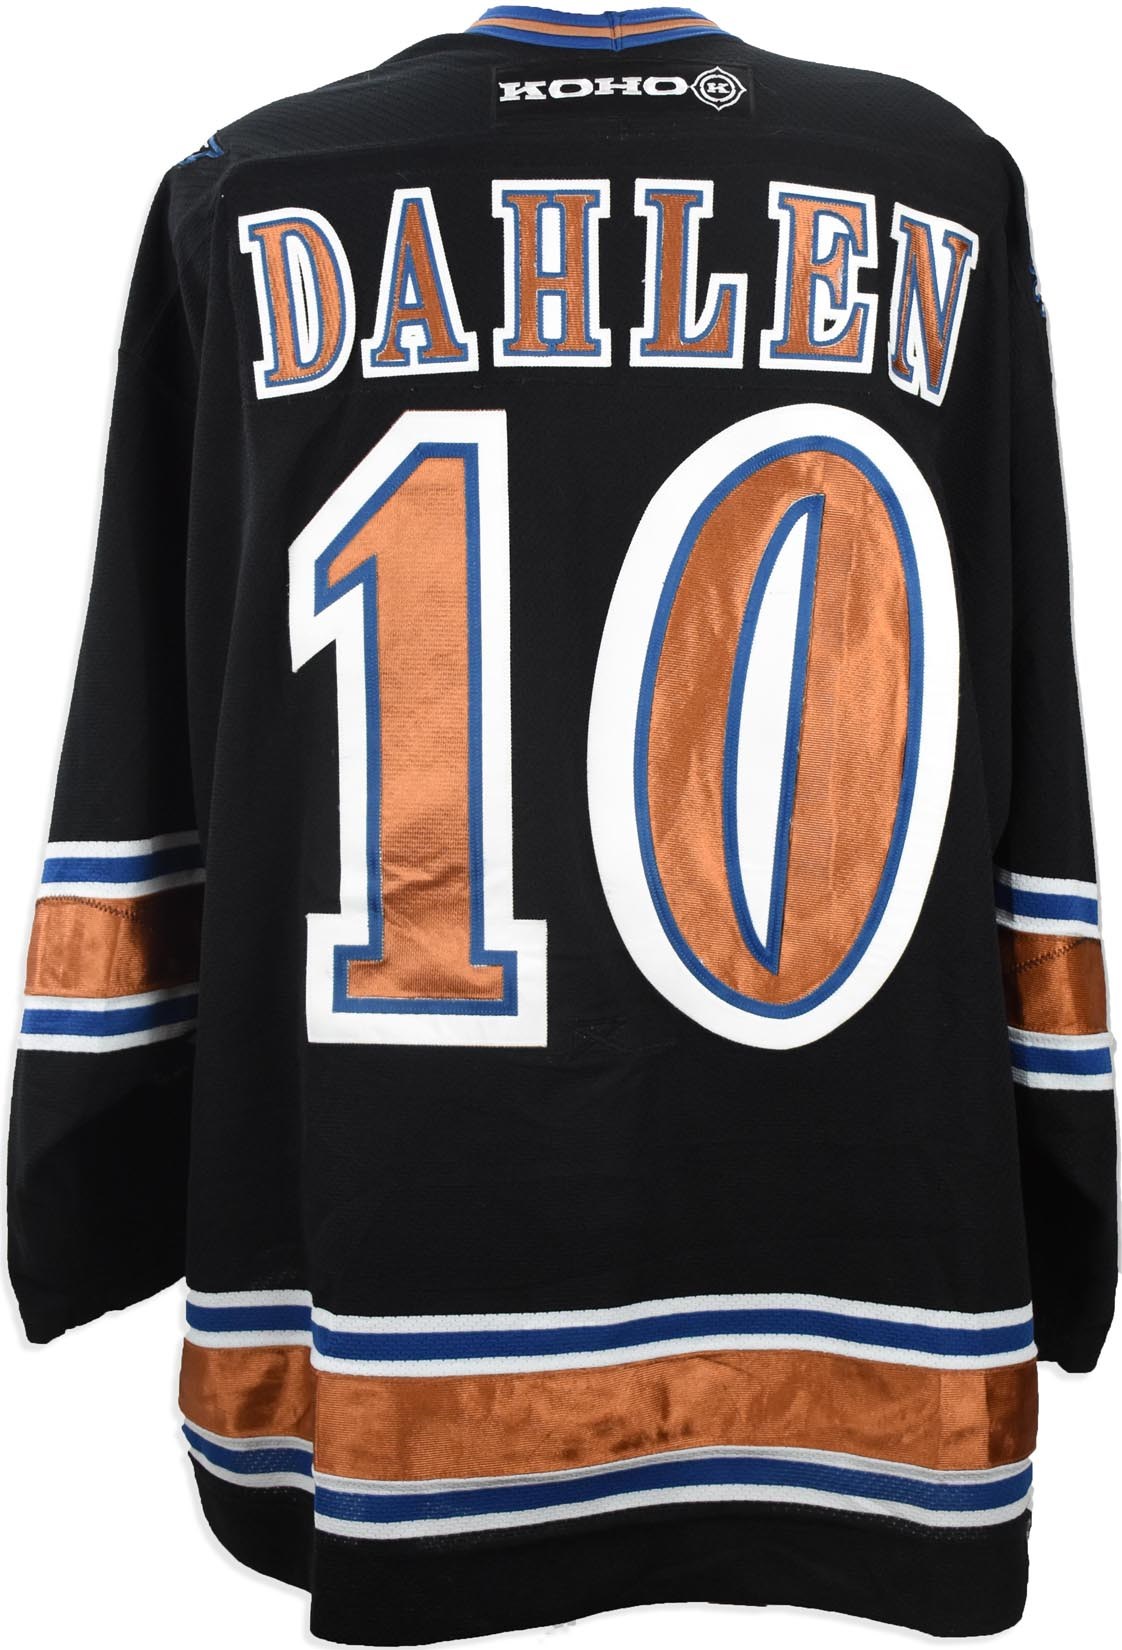 Hockey - Circa 2000-01 Ulf Dahlen Washington Capitals Game Worn Jersey